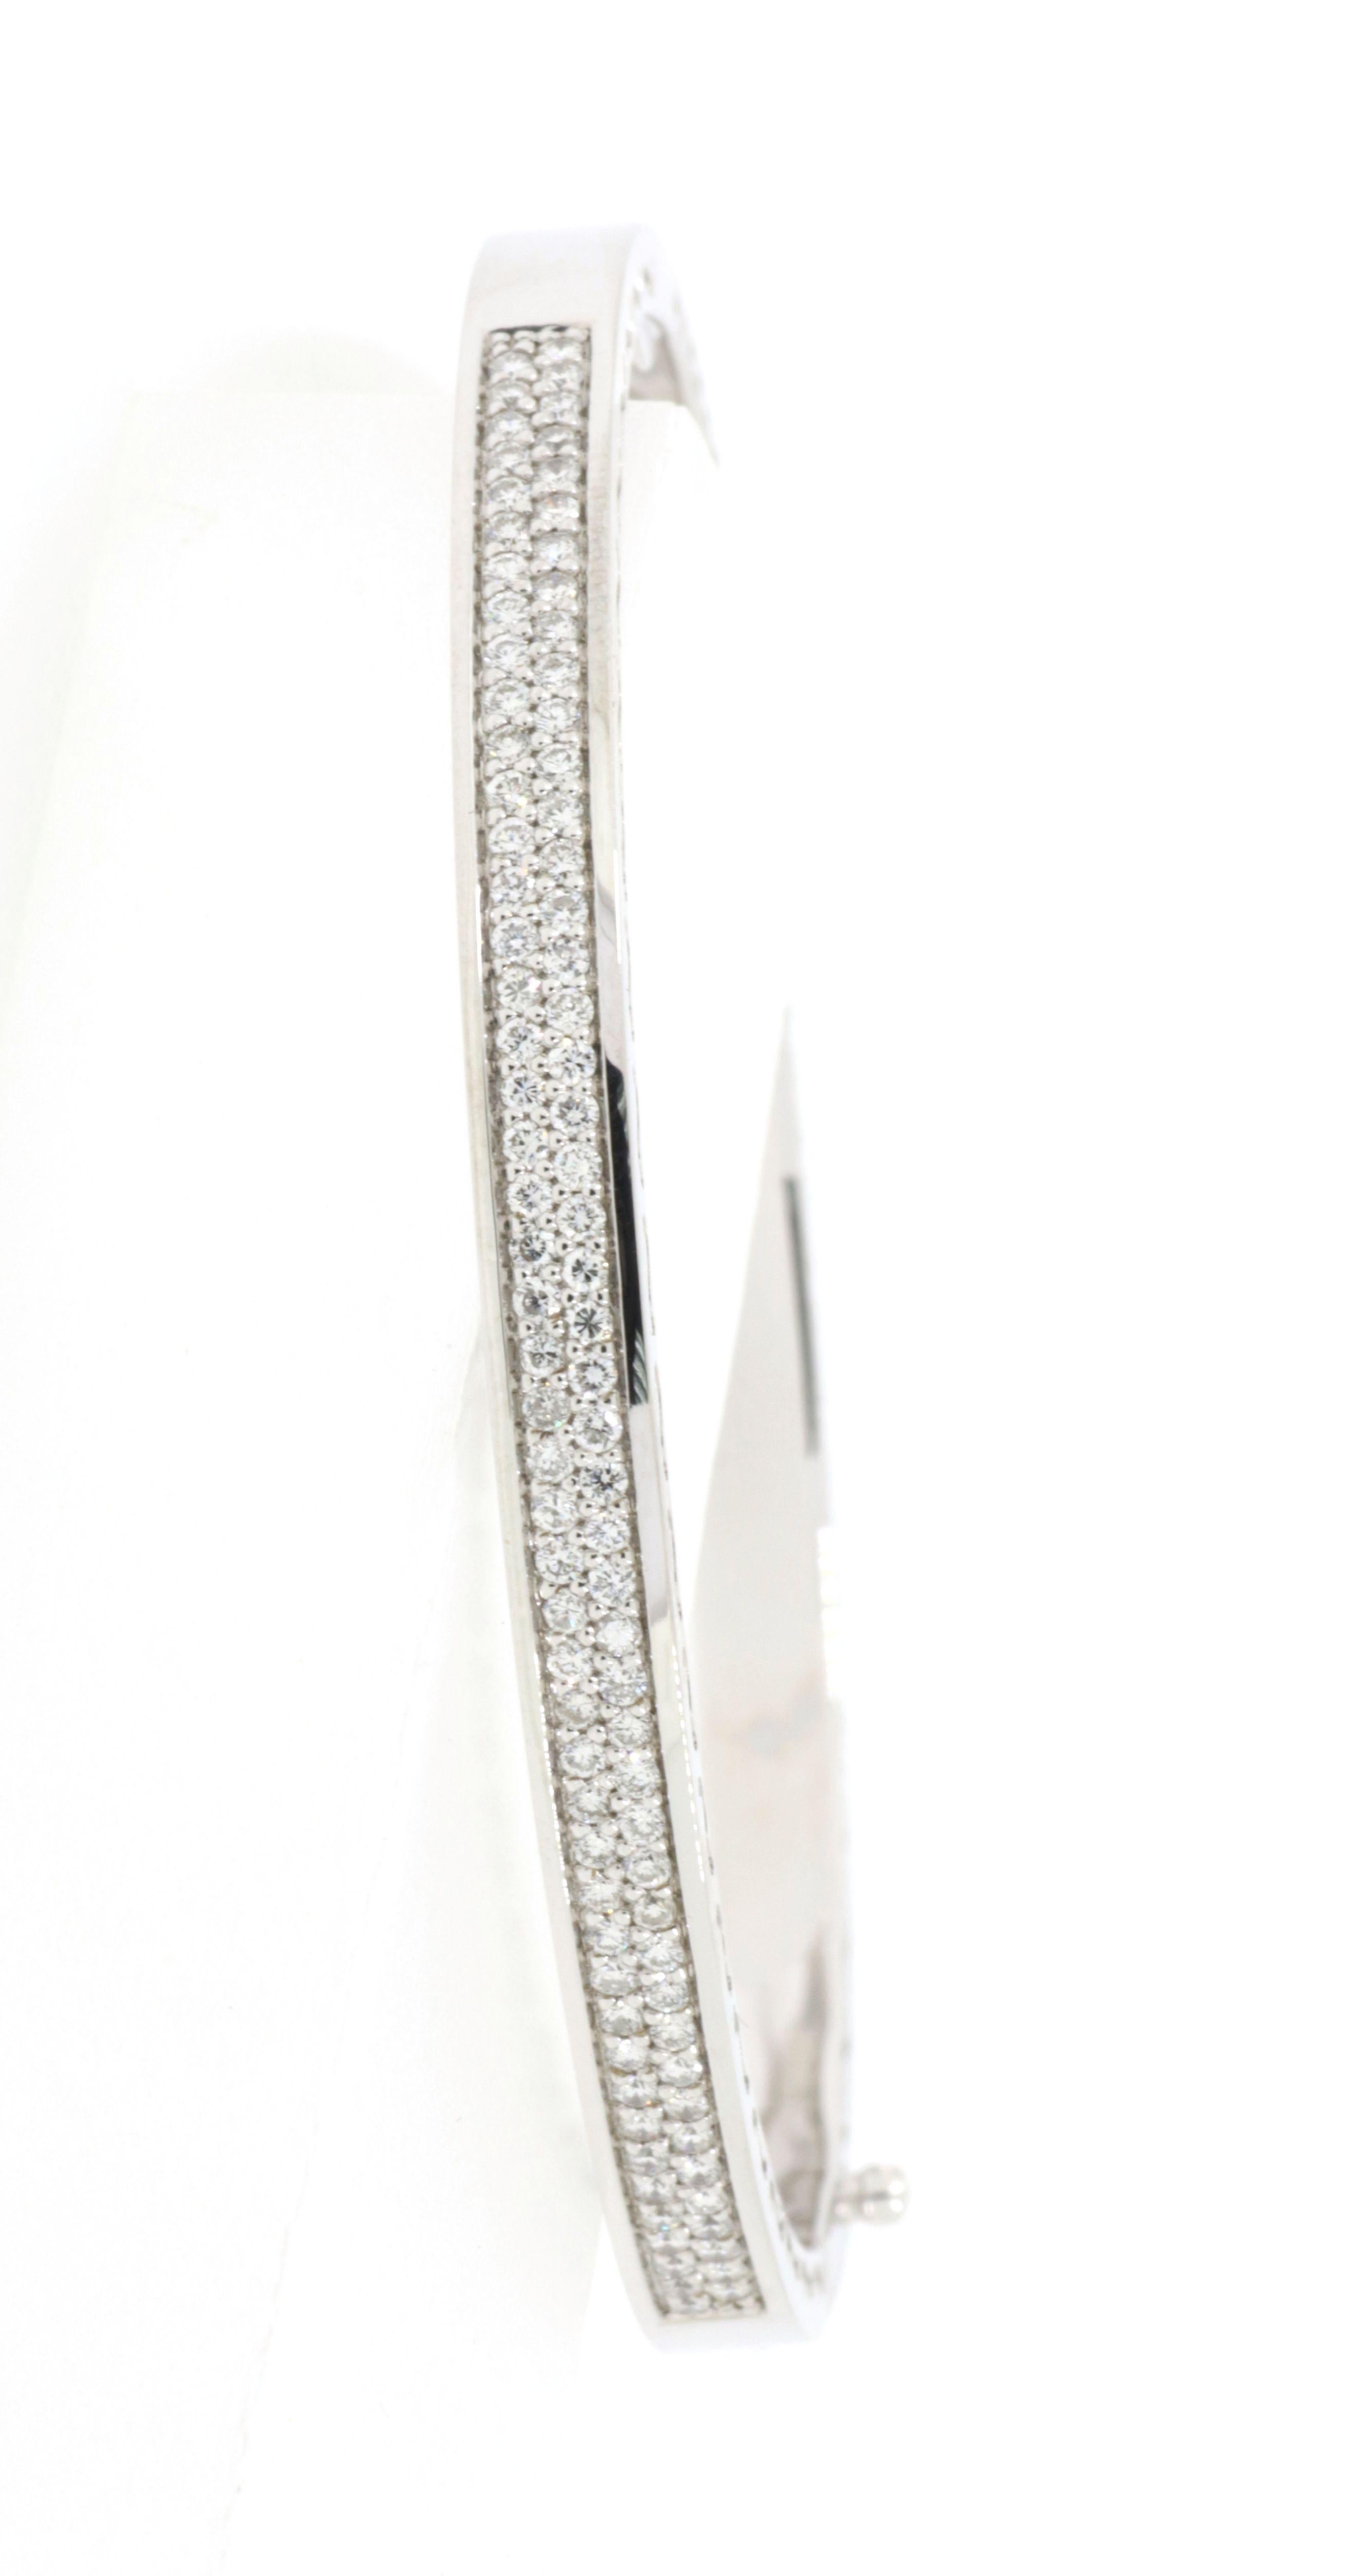 1 Carat Diamond Bracelet Bangle in 18 Karat White Gold For Sale 1